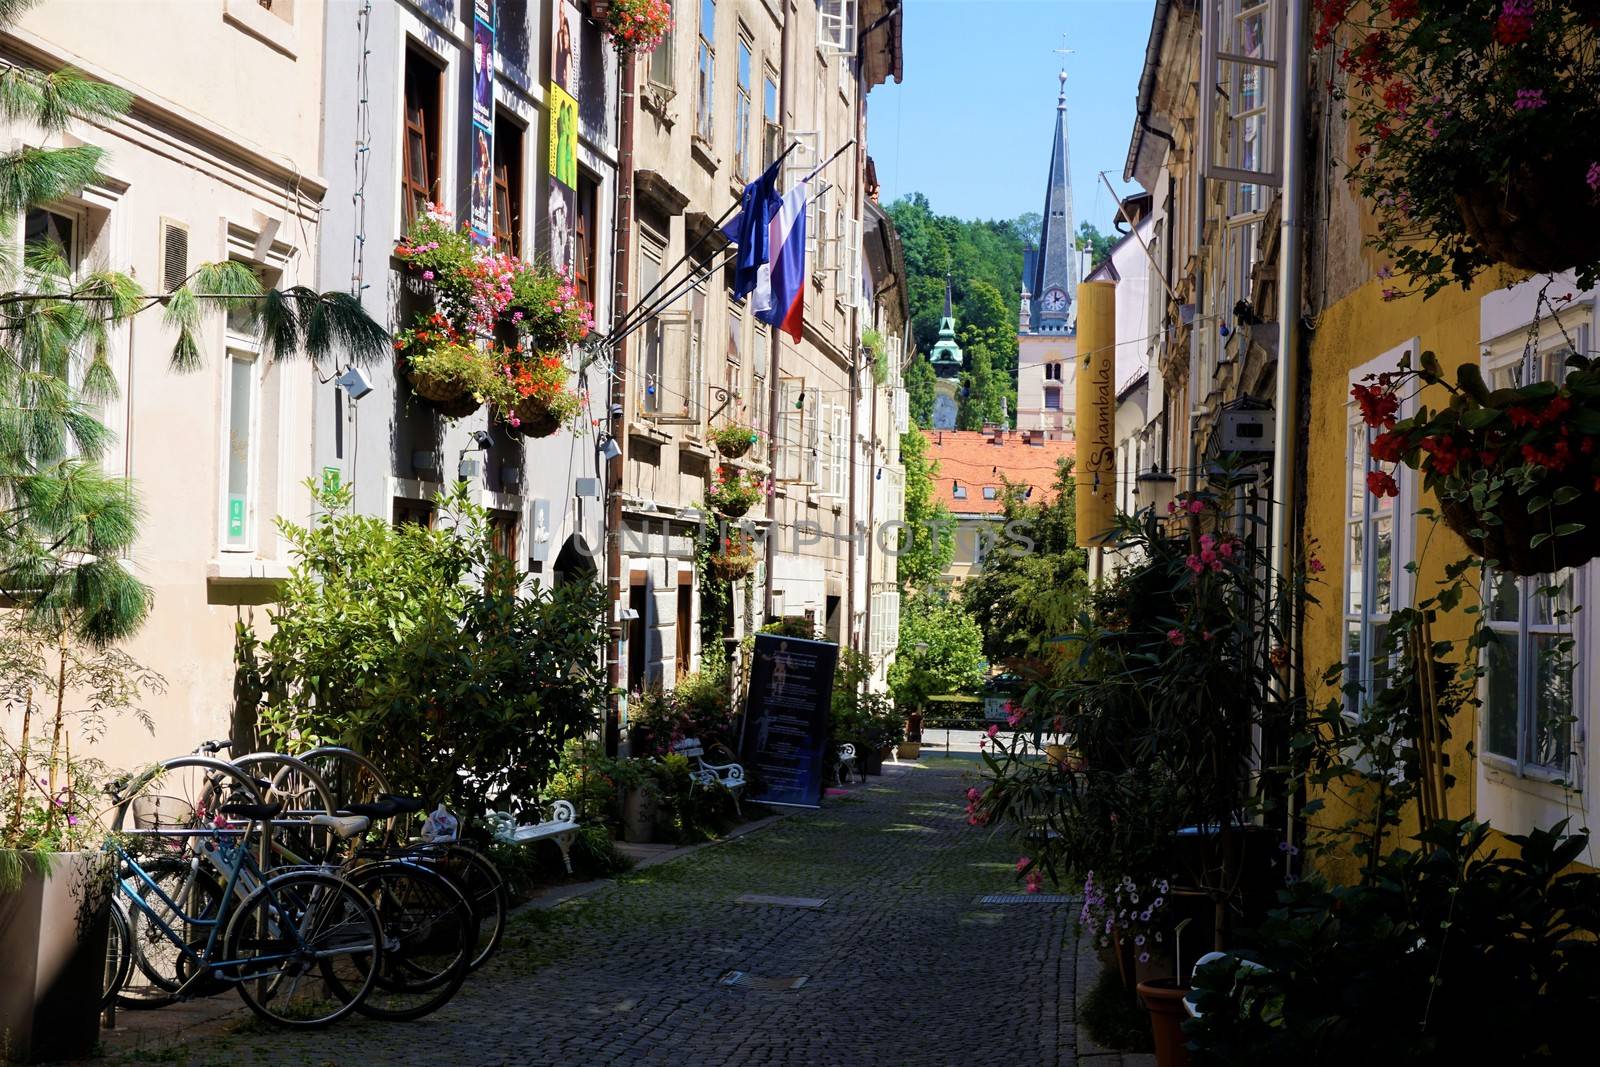 Beautiful Krizevniska ulica in Ljubljana city center by pisces2386